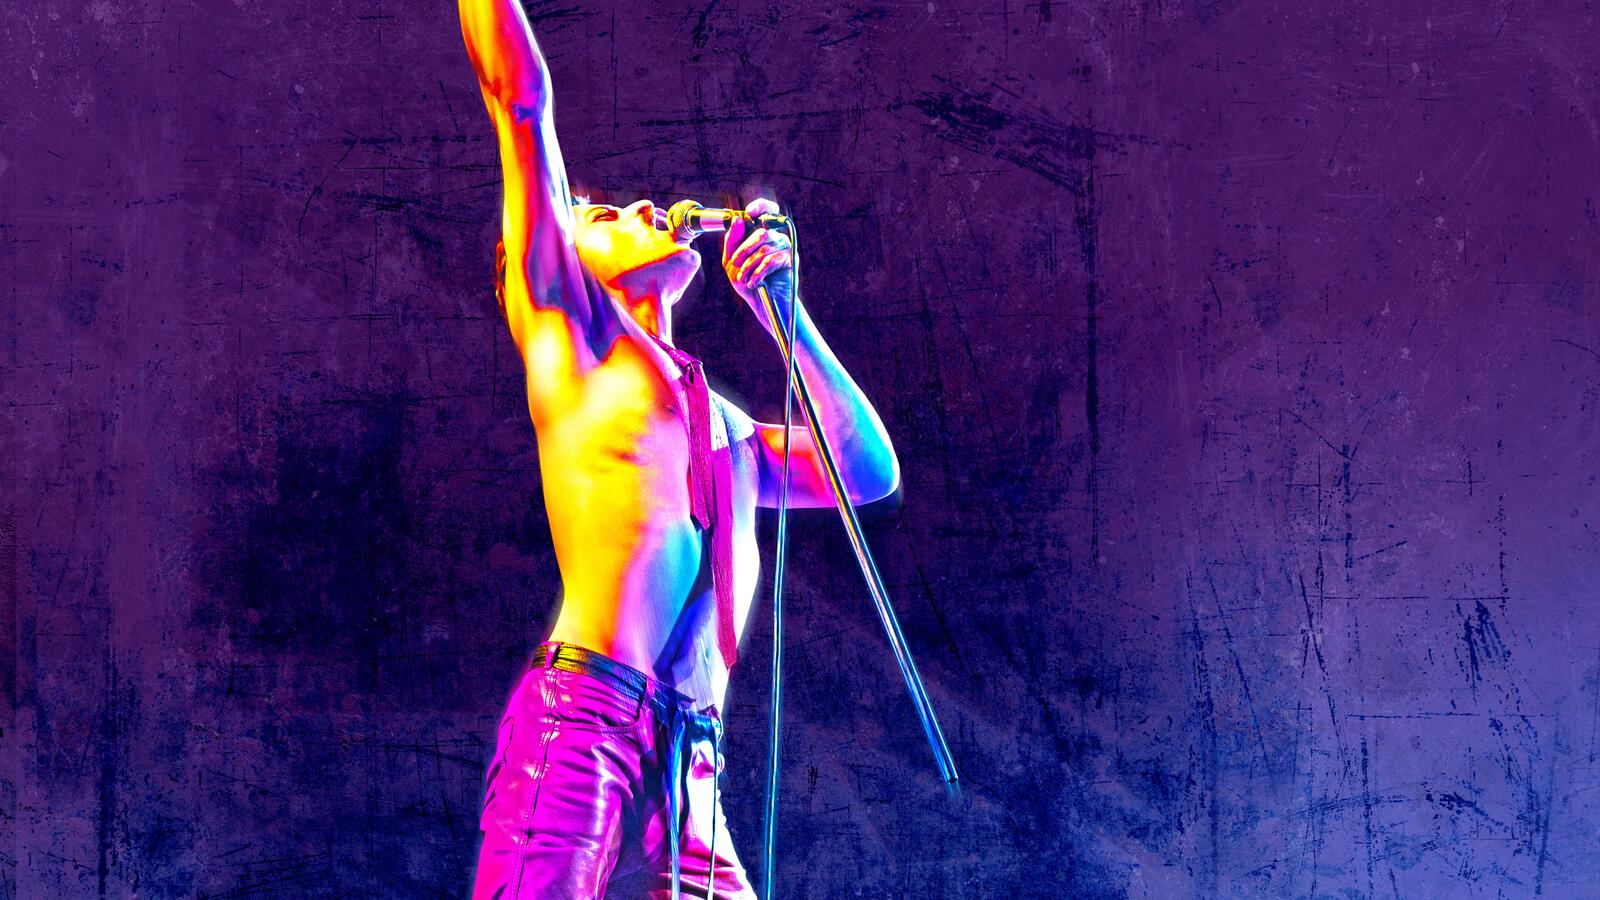 Wallpapers Bohemian Rhapsody 2018 movies Rami Malek on the desktop